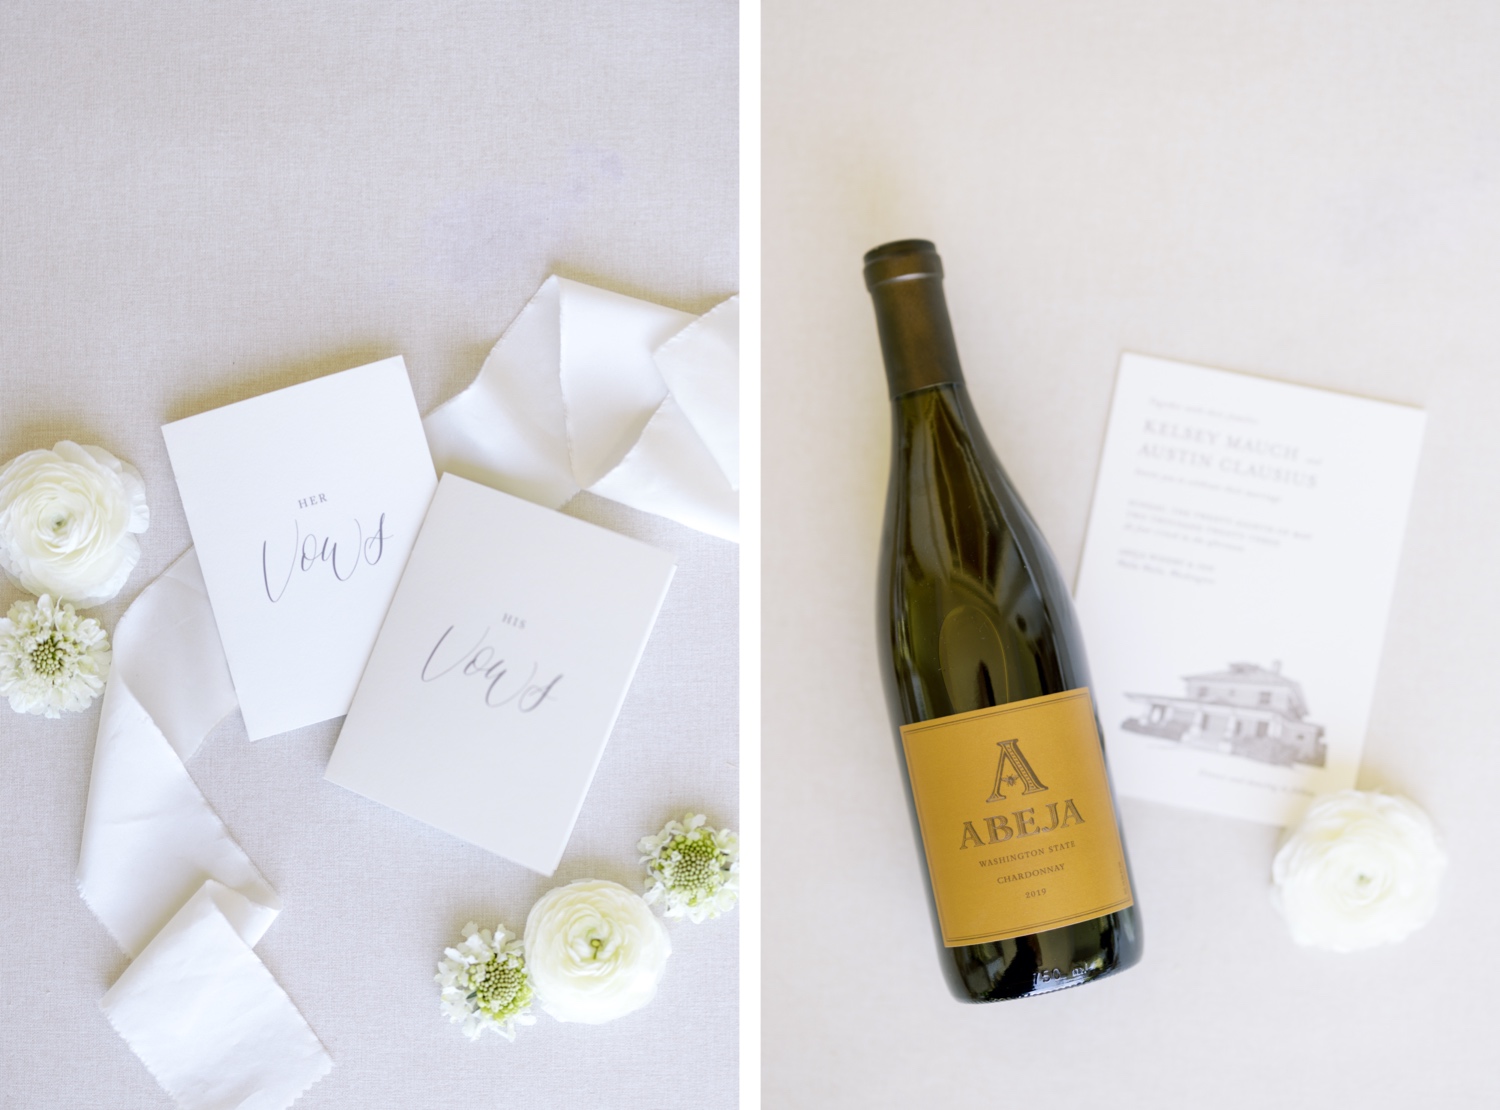 Sablewood Invitation and Abeja Wine for Abeja Winery Wedding